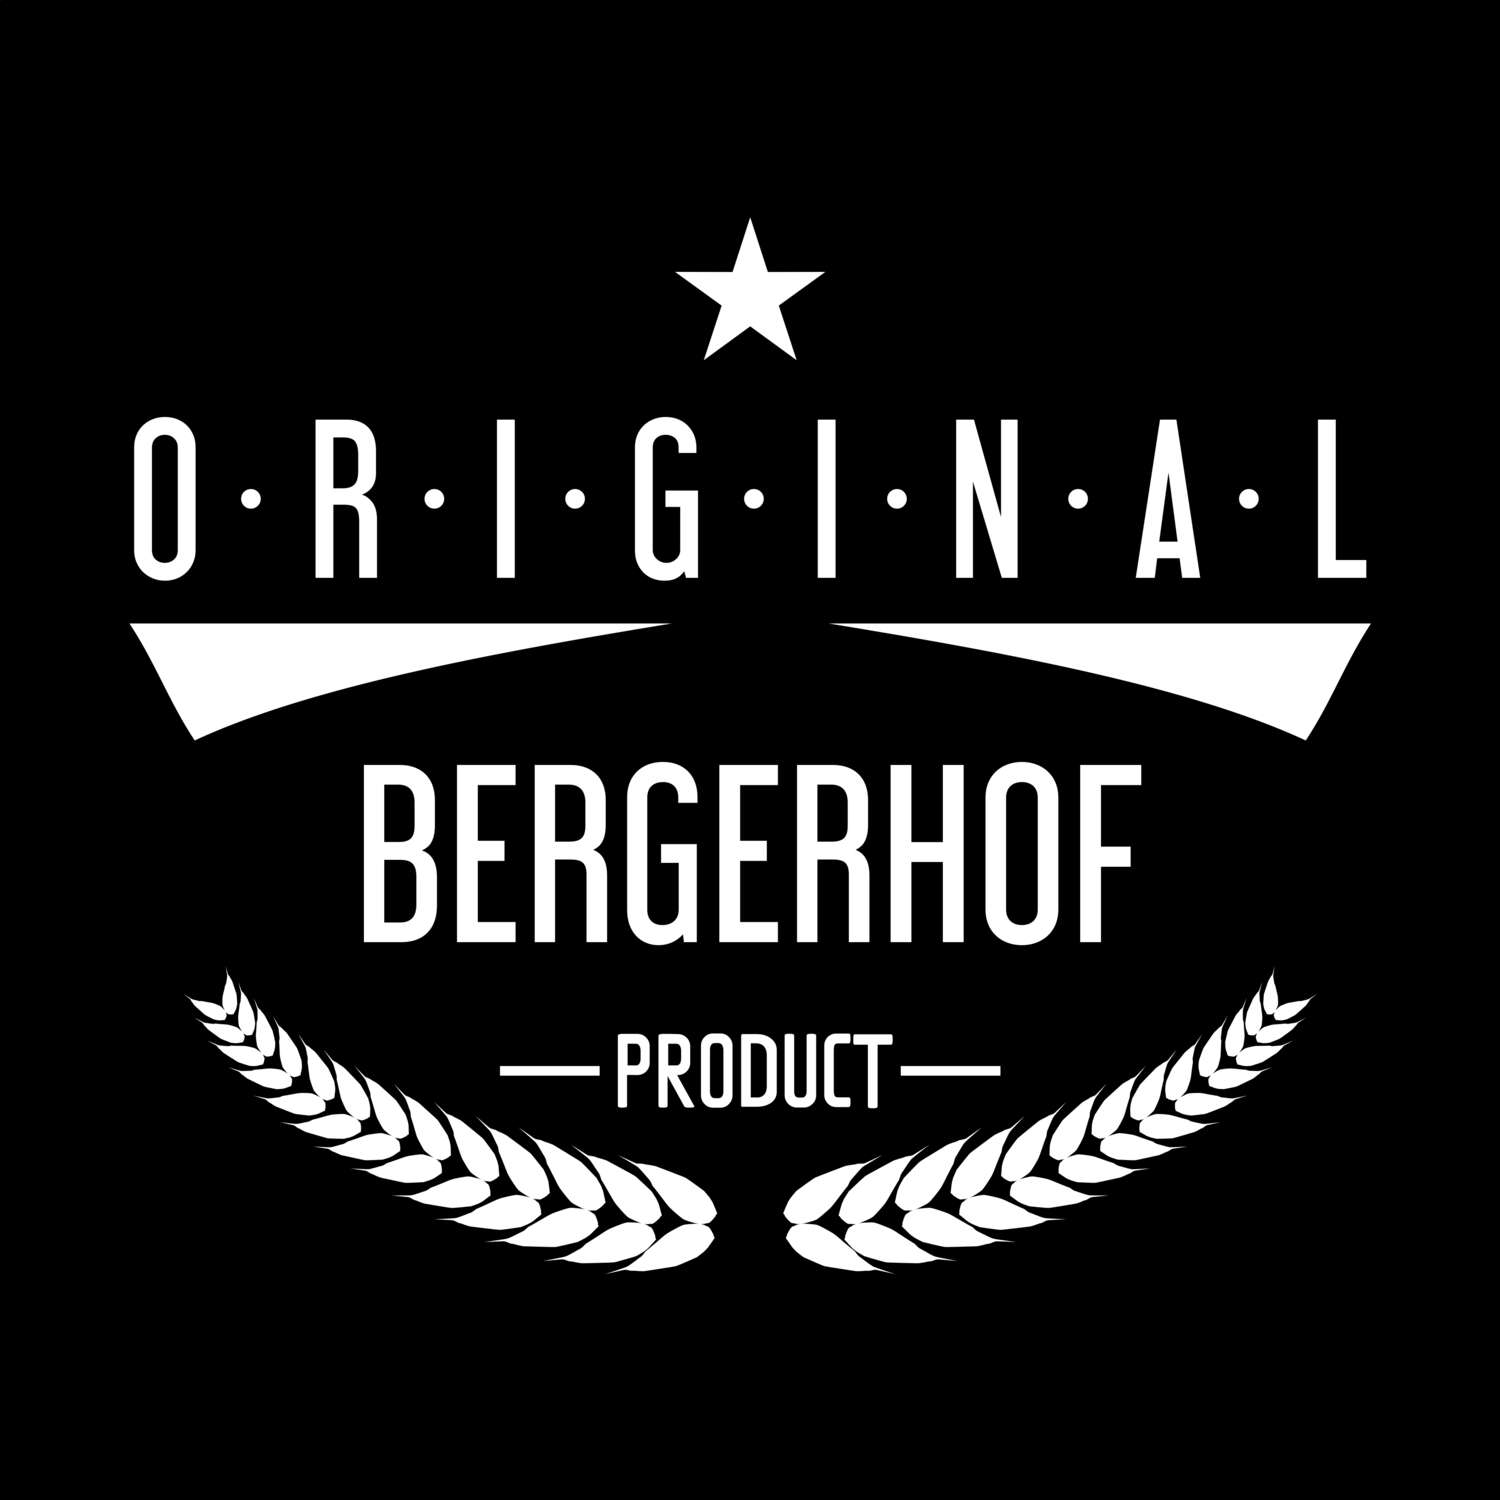 Bergerhof T-Shirt »Original Product«